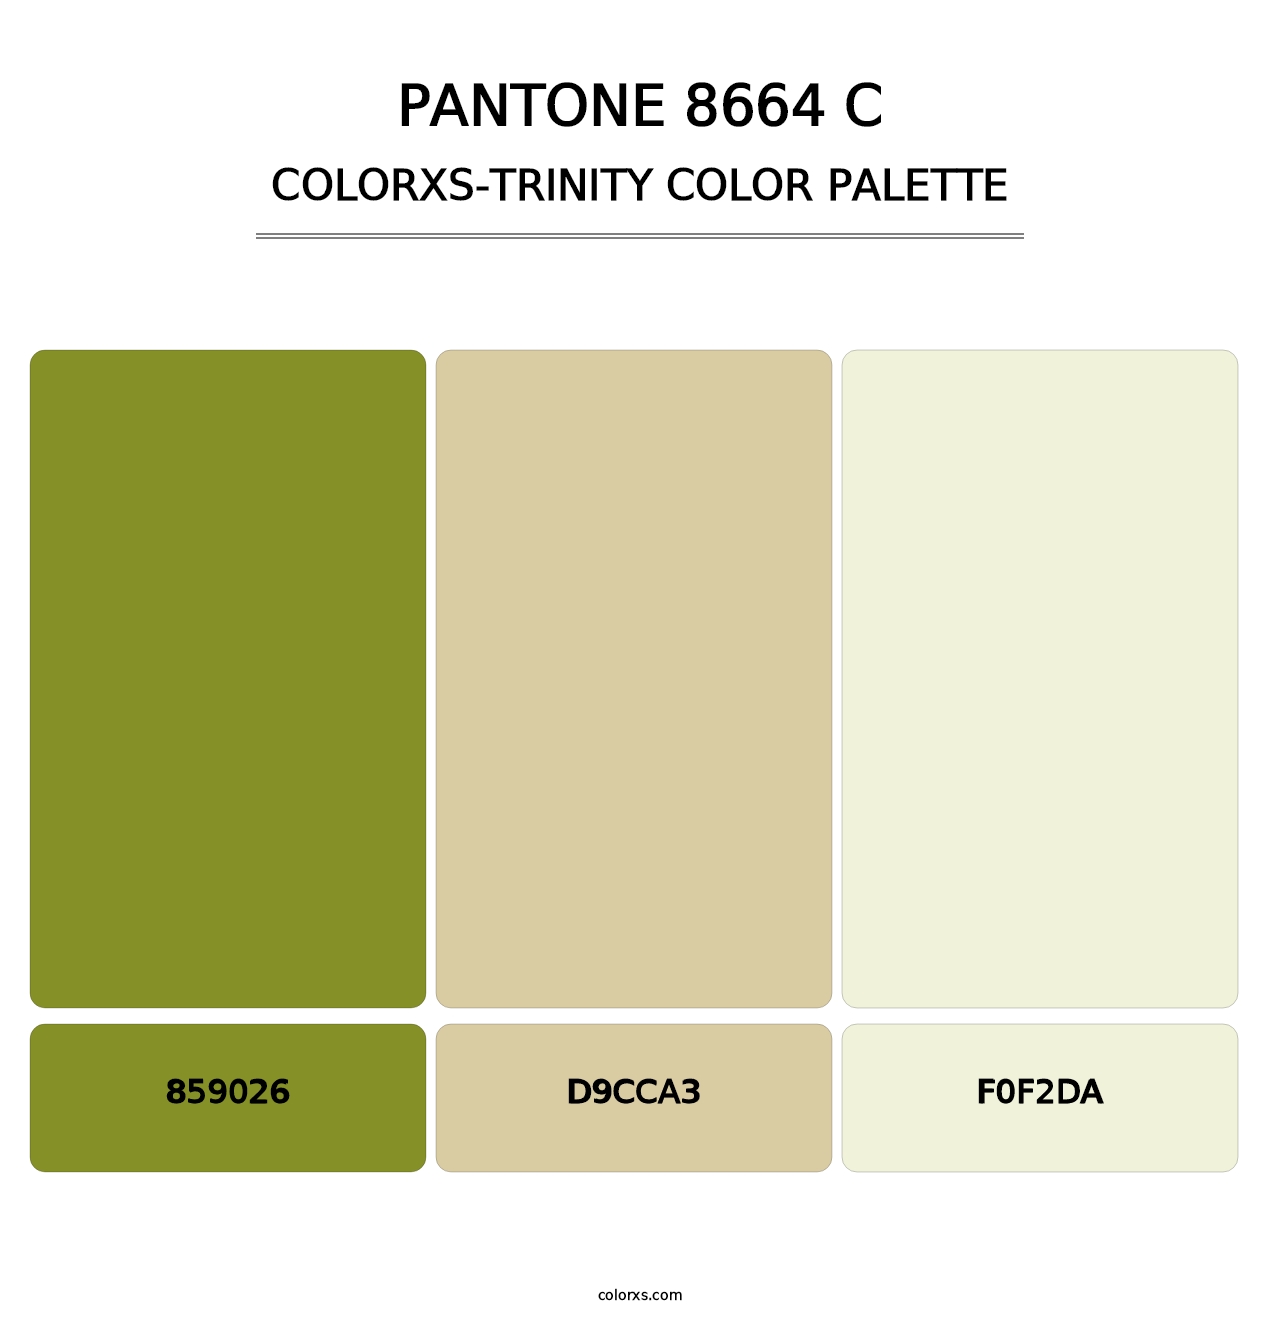 PANTONE 8664 C - Colorxs Trinity Palette